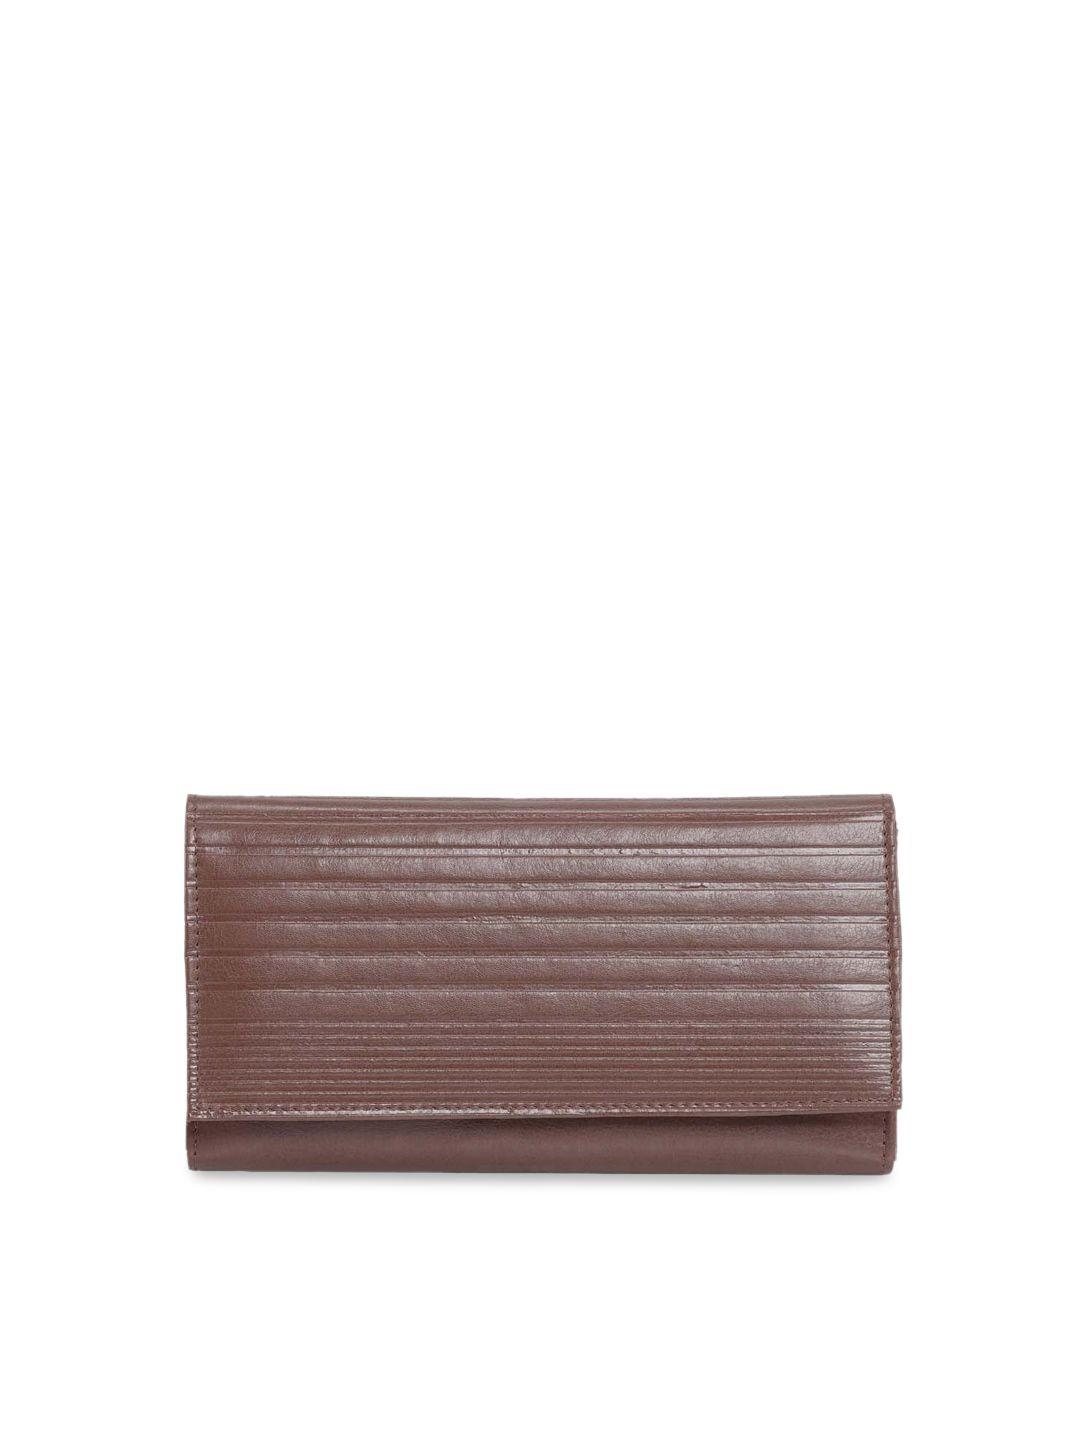 abeeza brown purse clutch